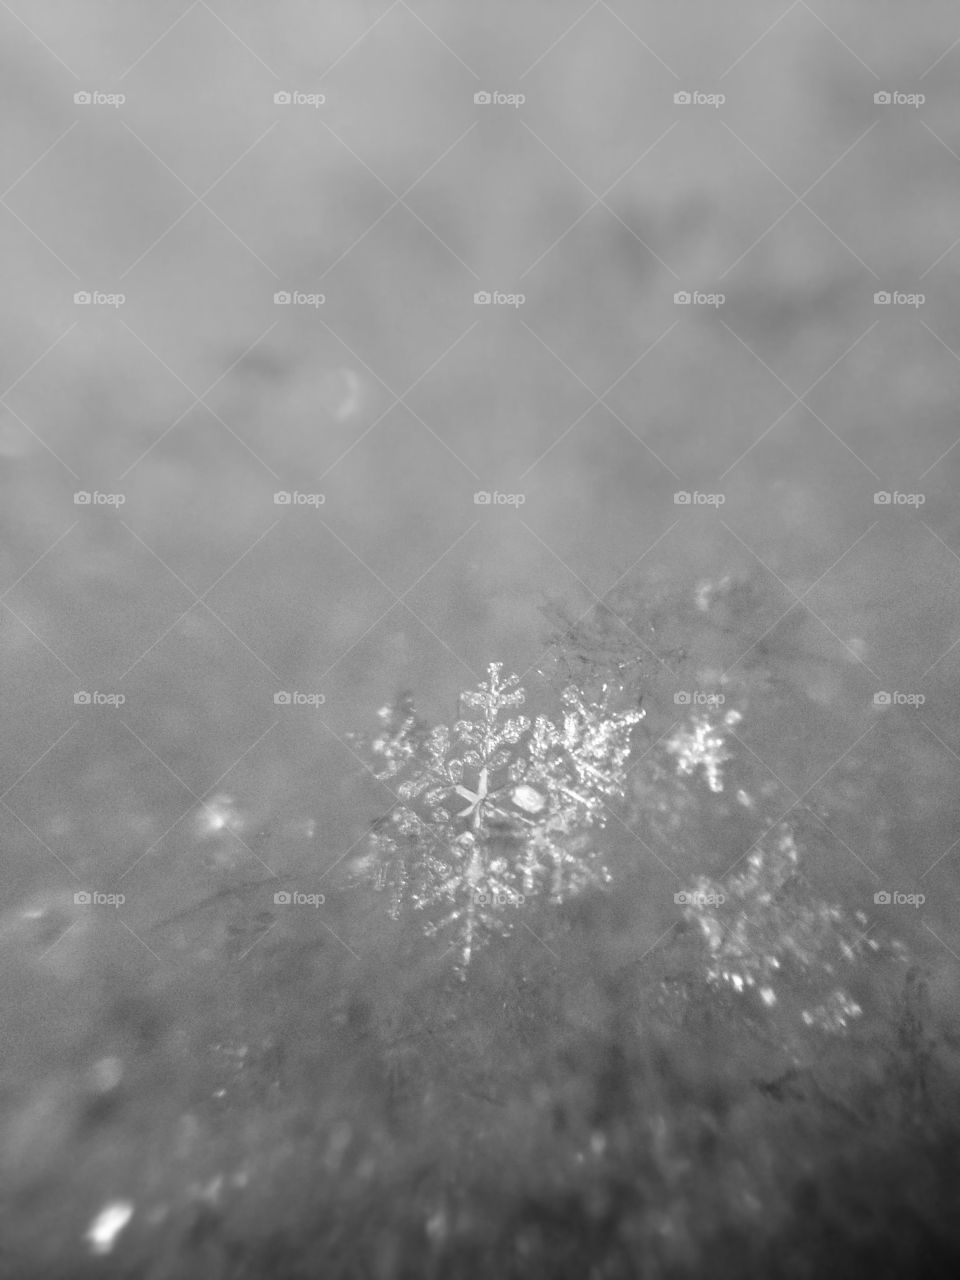 Snowflake taken with macro lens on iphone5